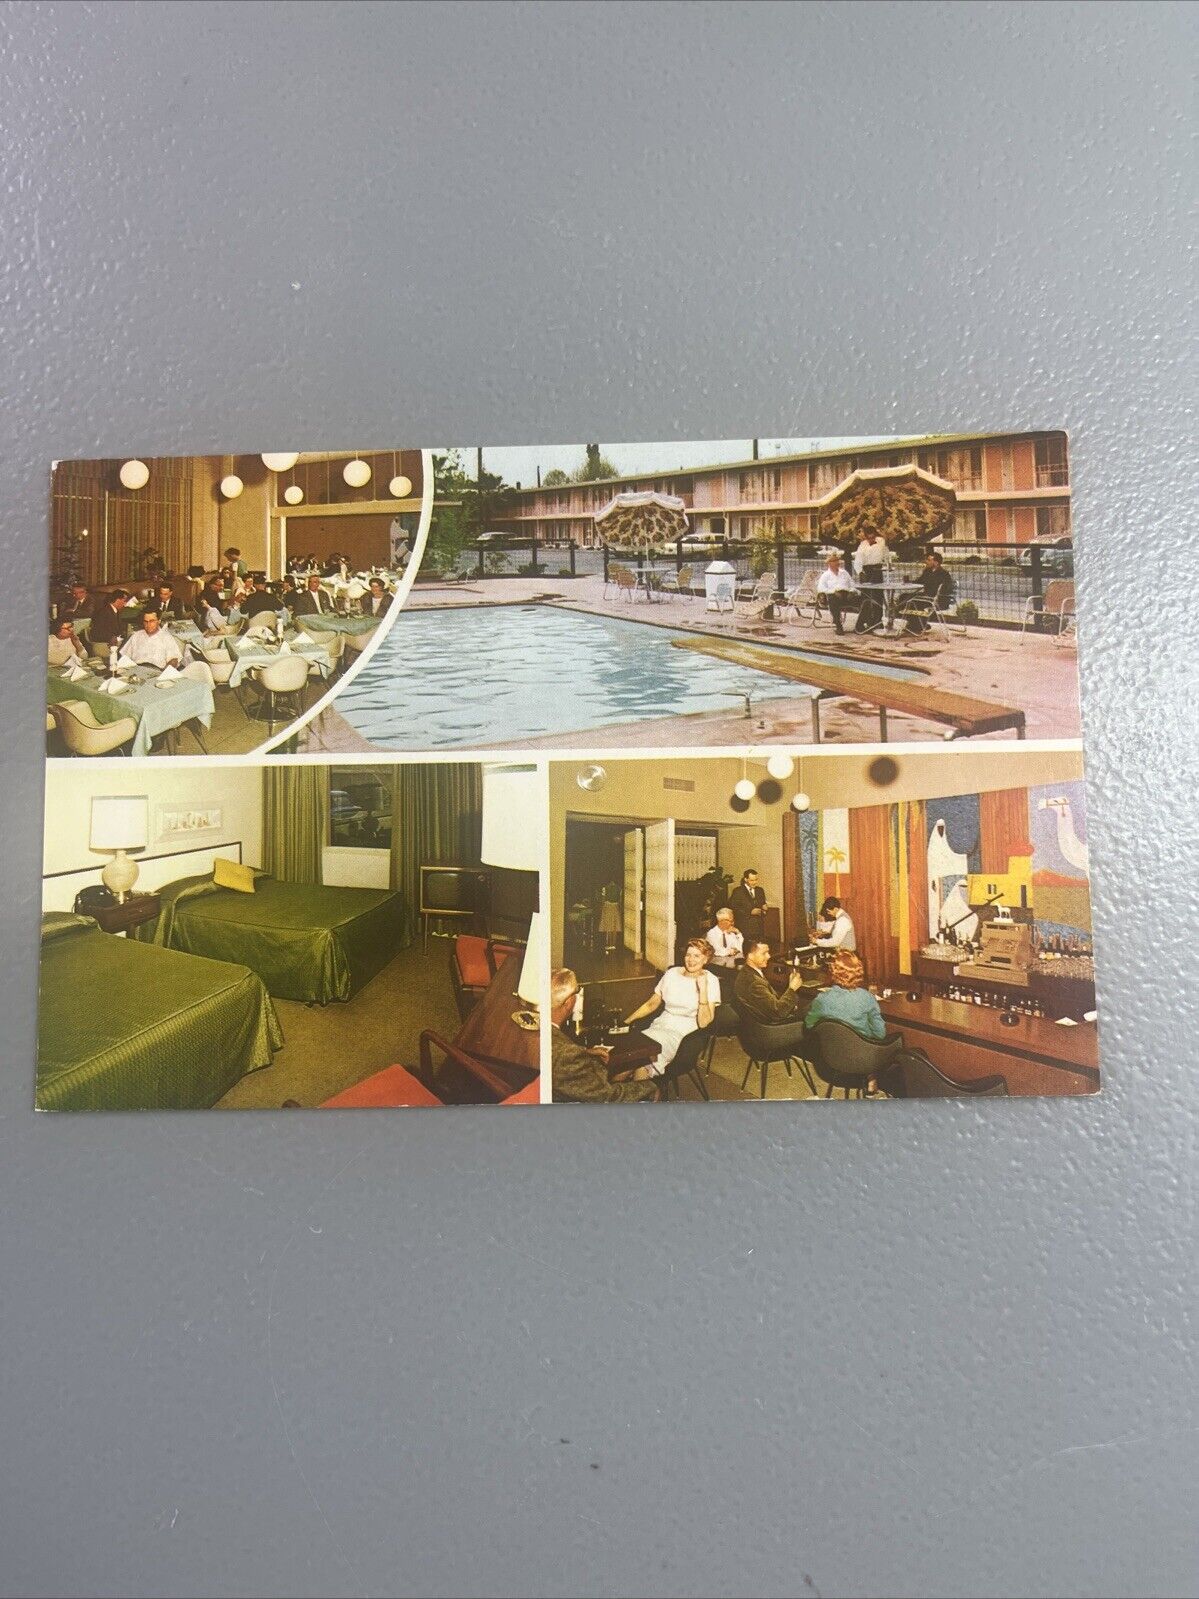 Sands Inn Motel Bakersfield California vintage postcard 